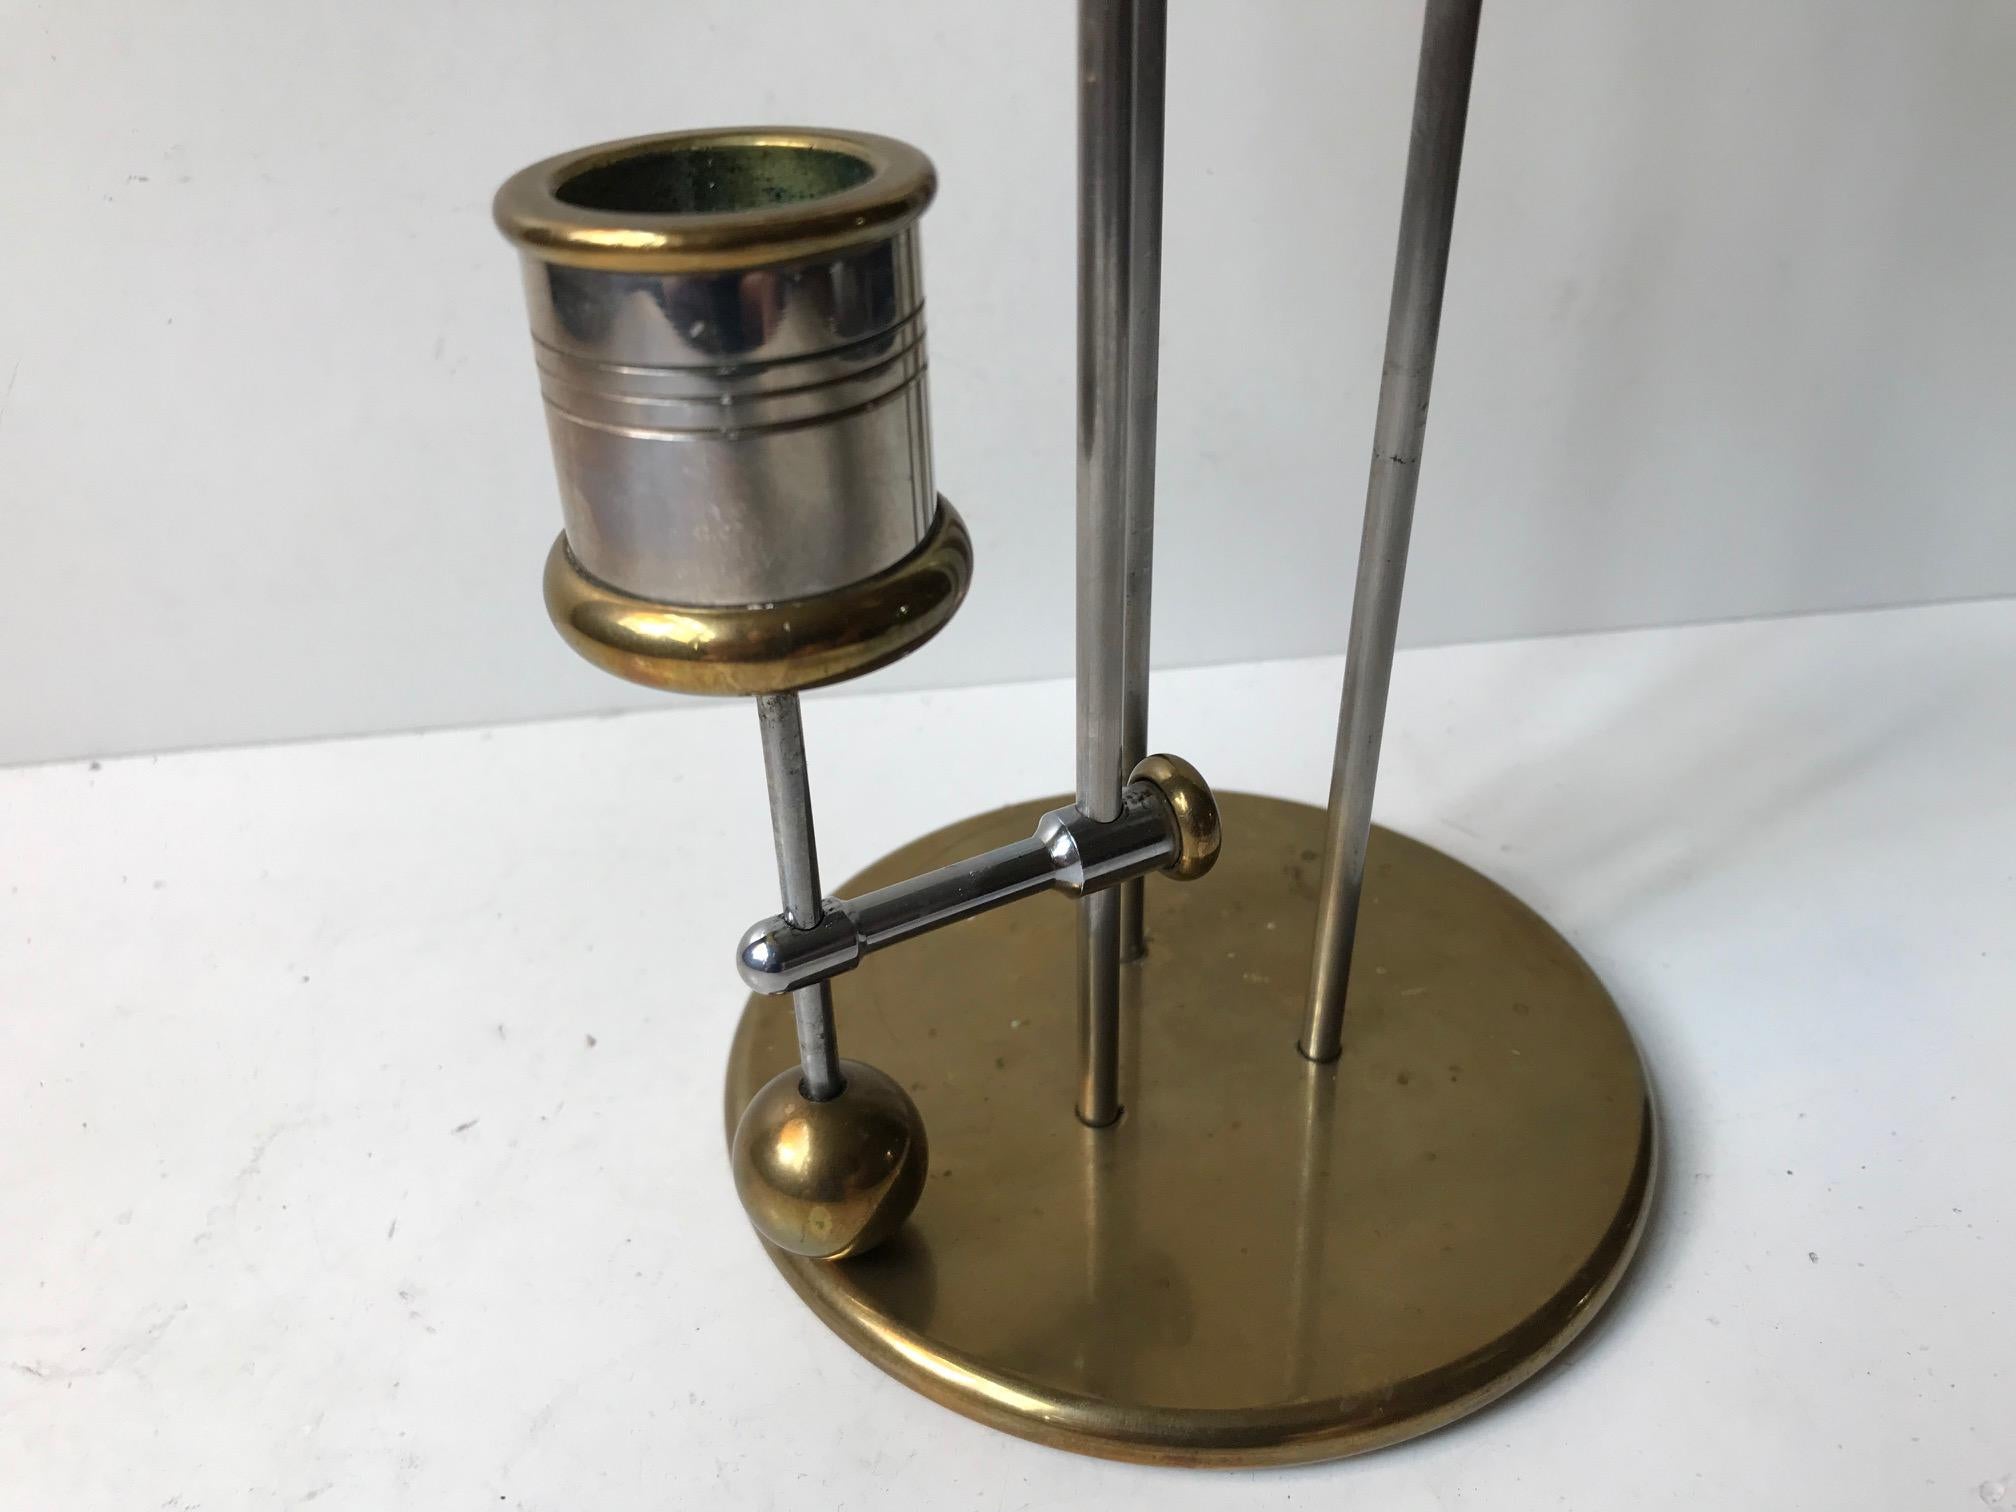 Modern Nautical Danish Counterweight Candlestick in Brass and Steel